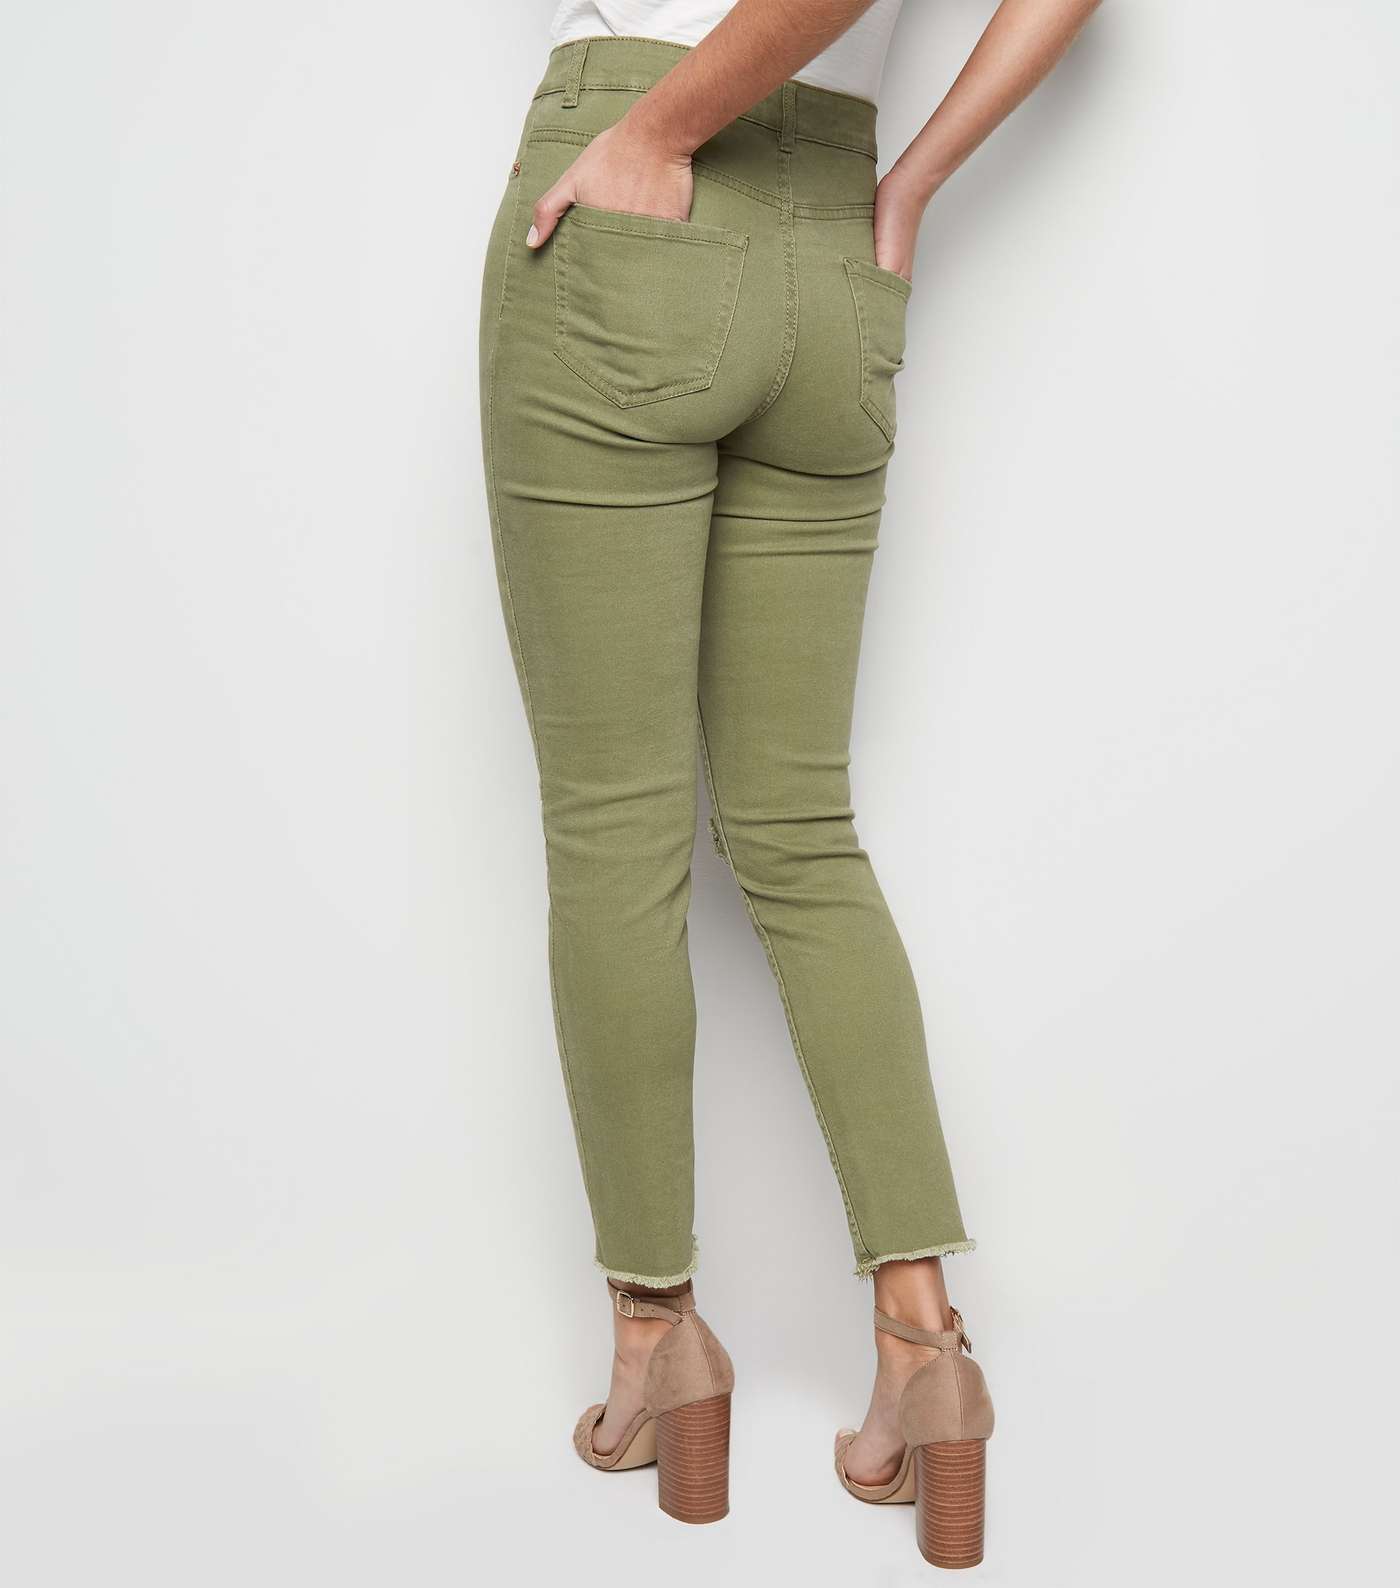 Khaki Ripped Raw Hem Skinny Jenna Jeans Image 5